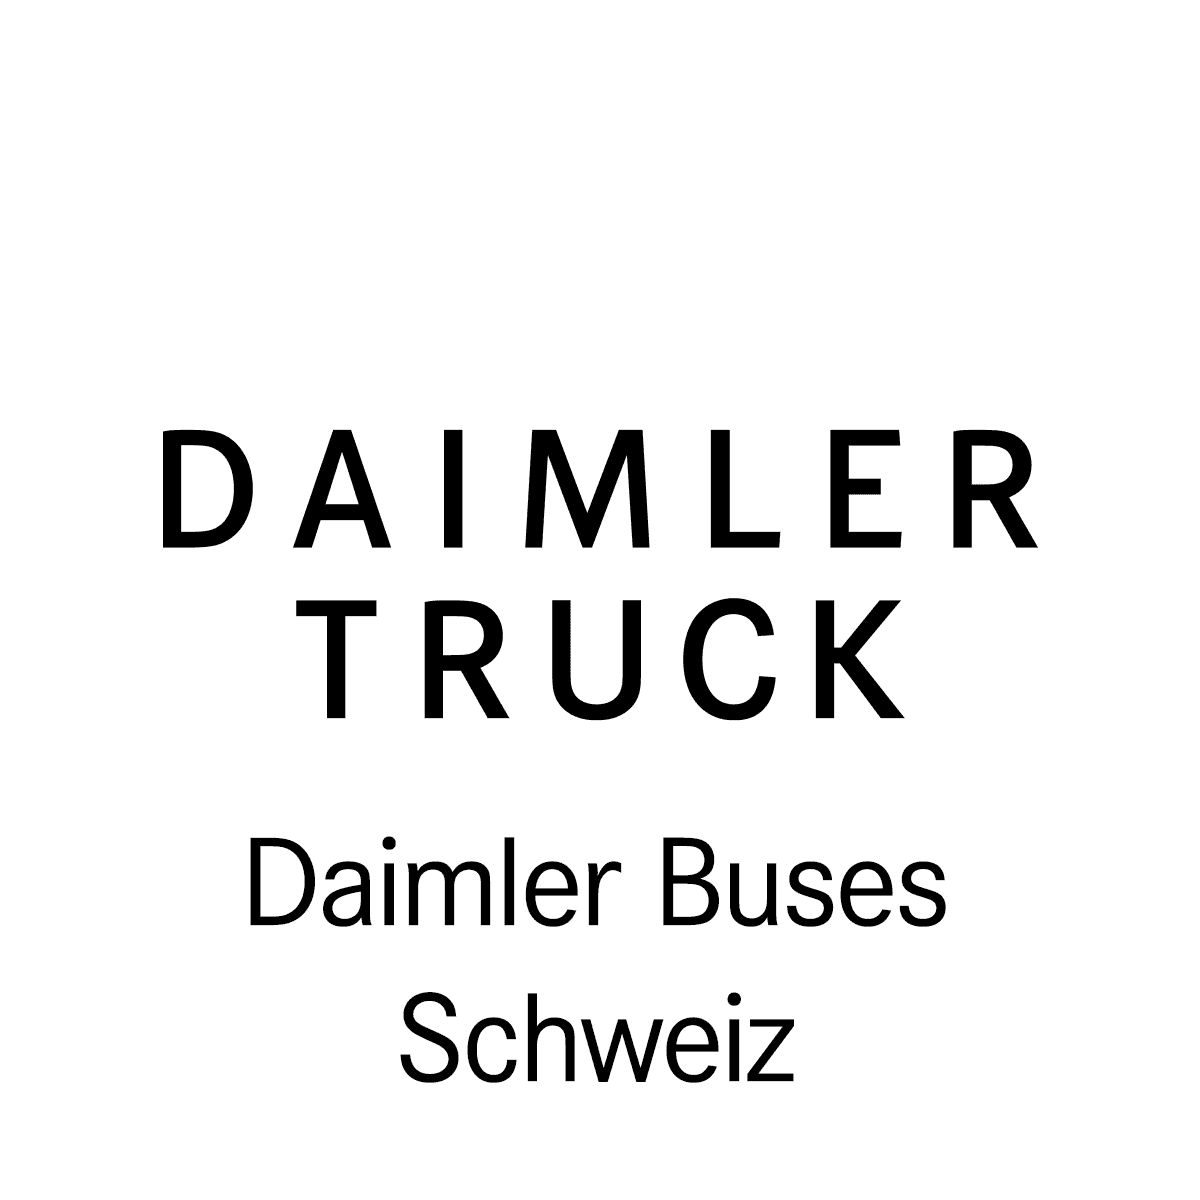 Daimler Buses Schweiz AG